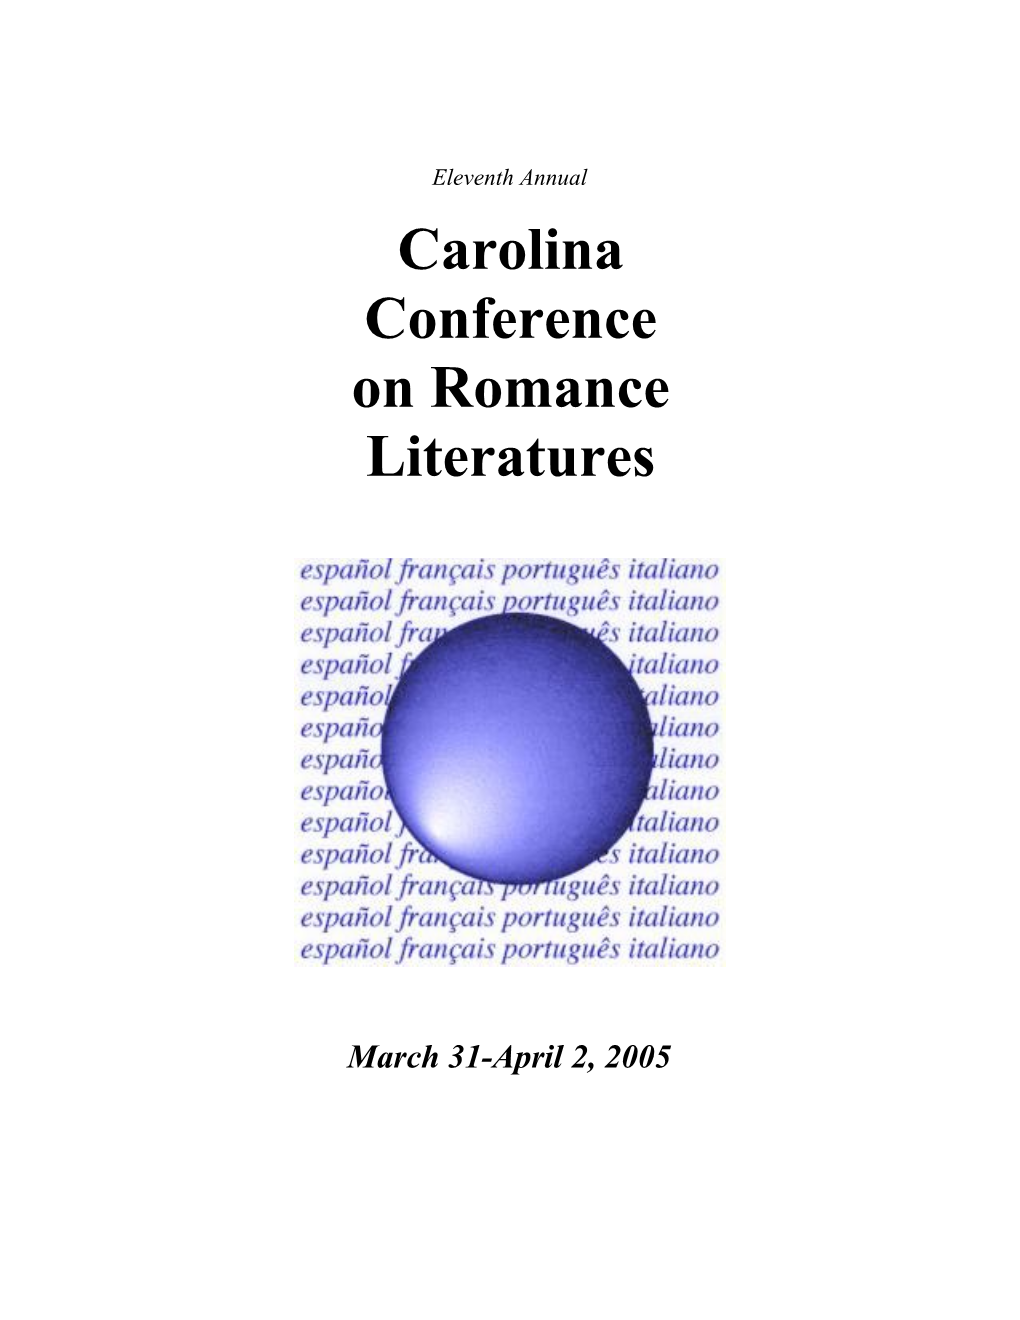 Carolina Conference on Romance Literatures